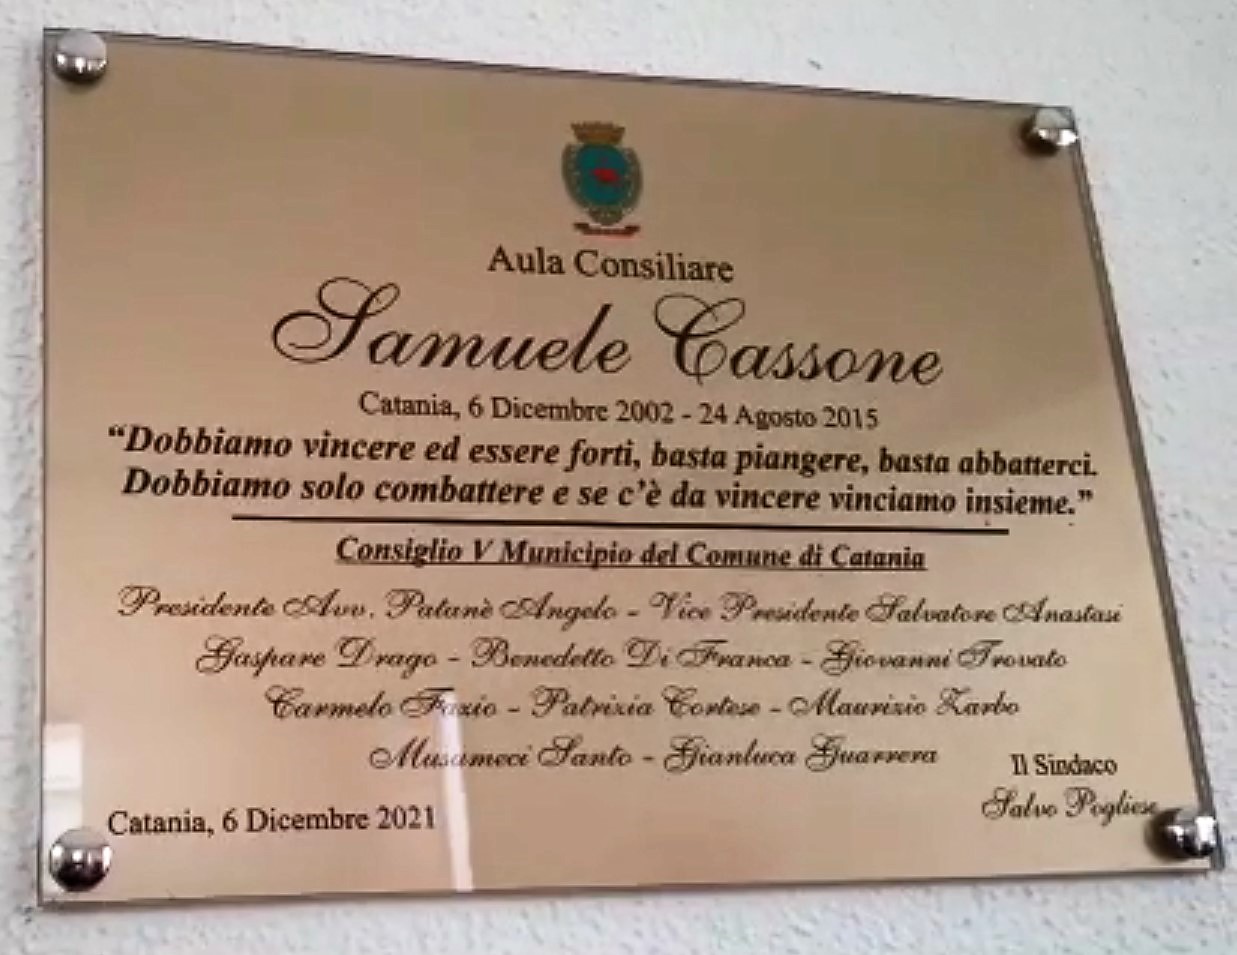 Samuele Cassone